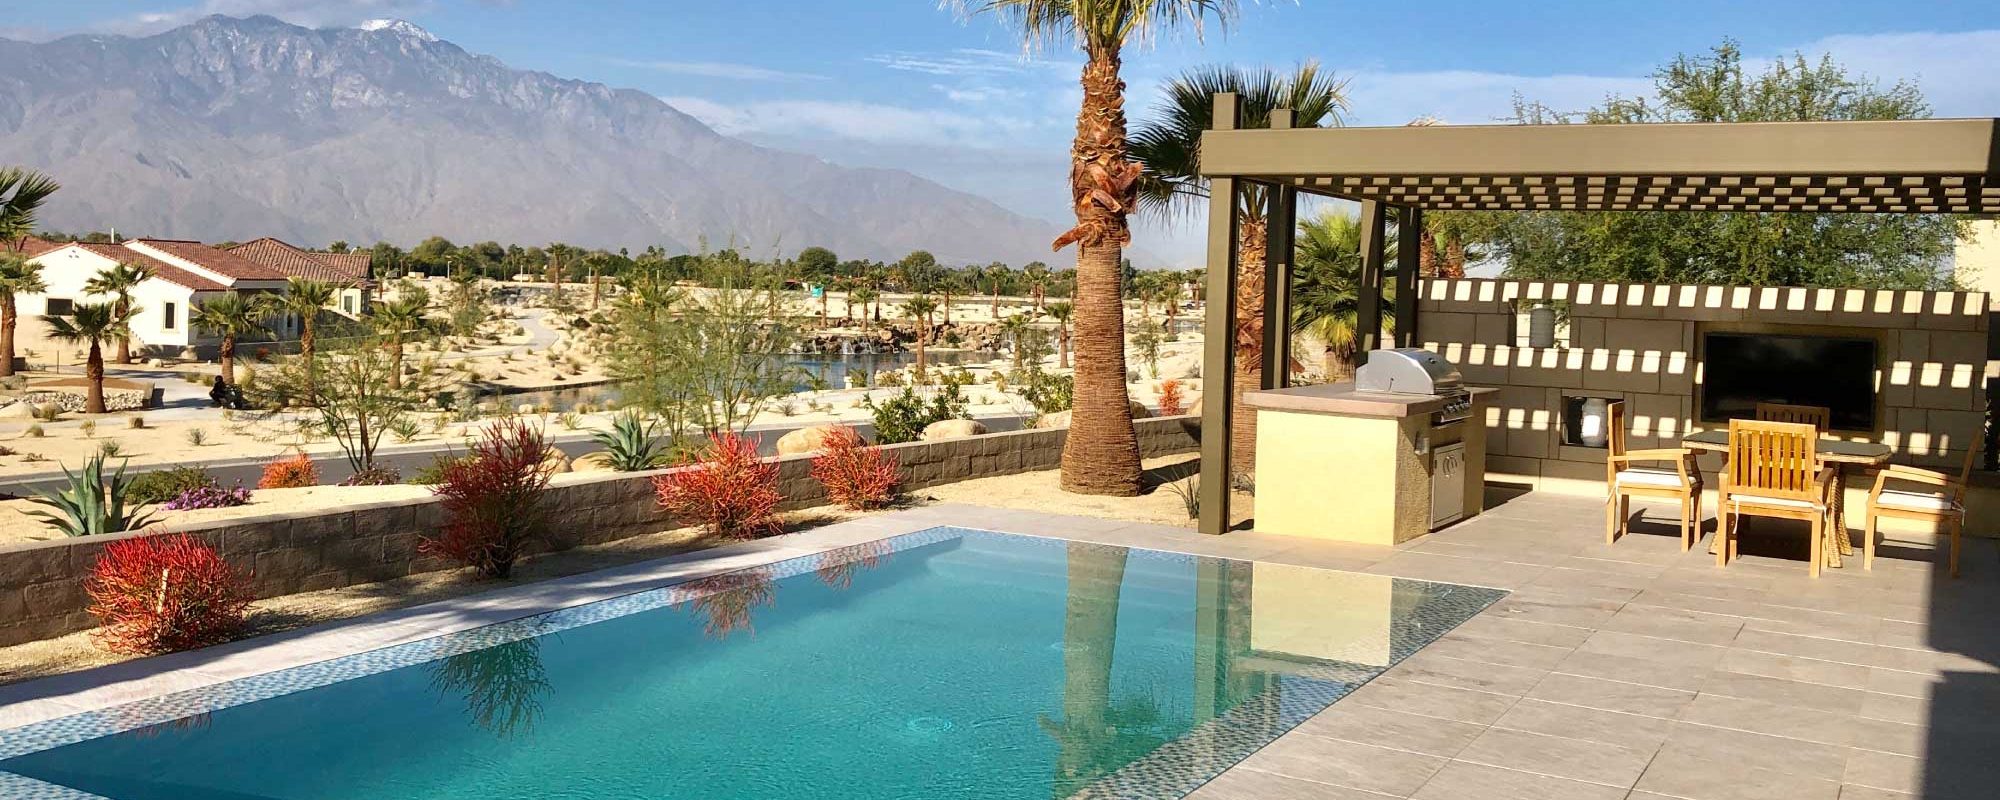 Del Webb Rancho Mirage Pool | Kevin Stanley Real Estate Agent